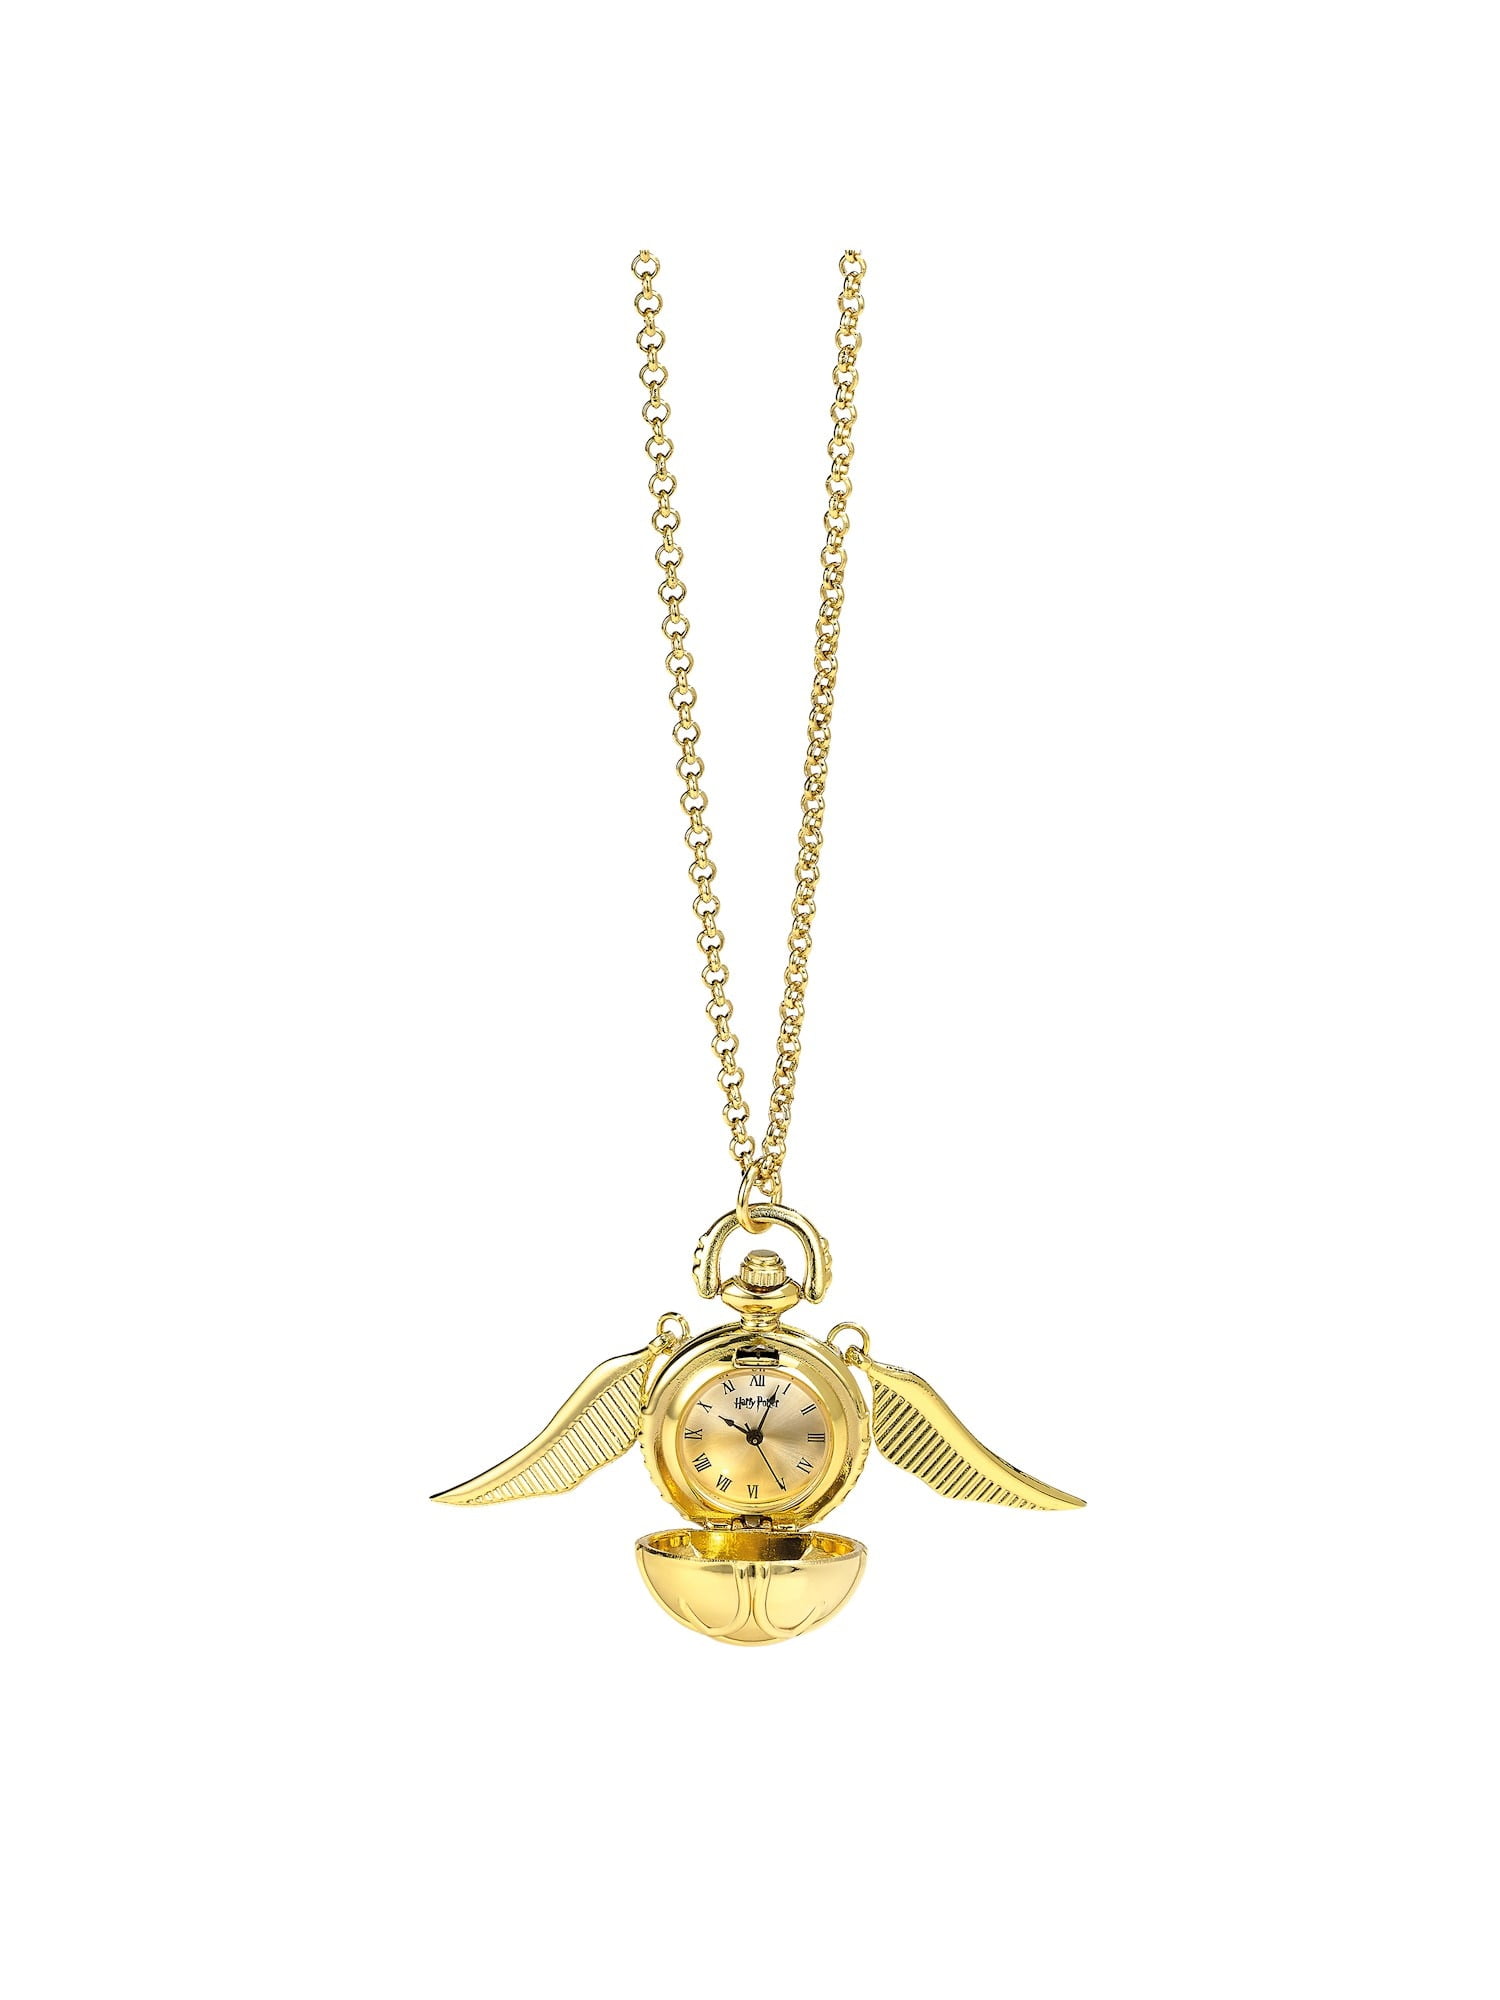 Harry Potter Winged Key Pendant Necklace Set